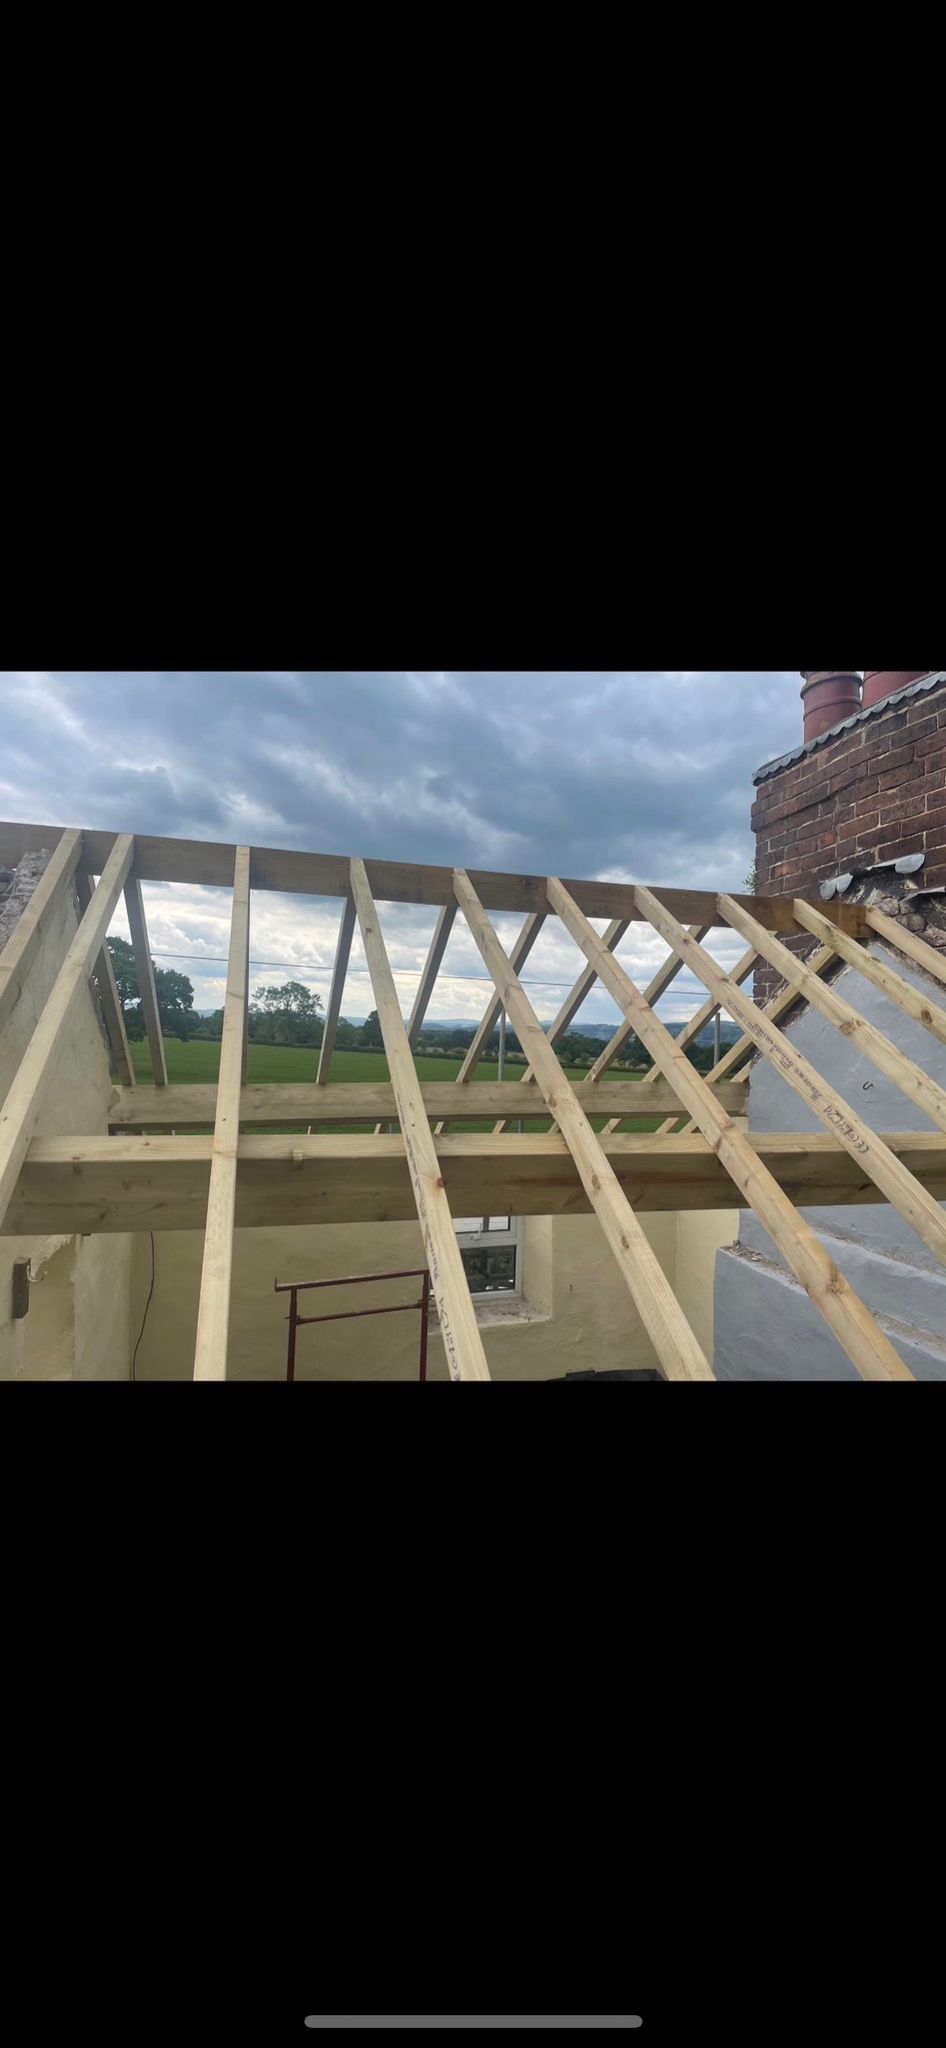 Timberwork Roof Contractors Gwalchmai, LL65 - DD Roofing